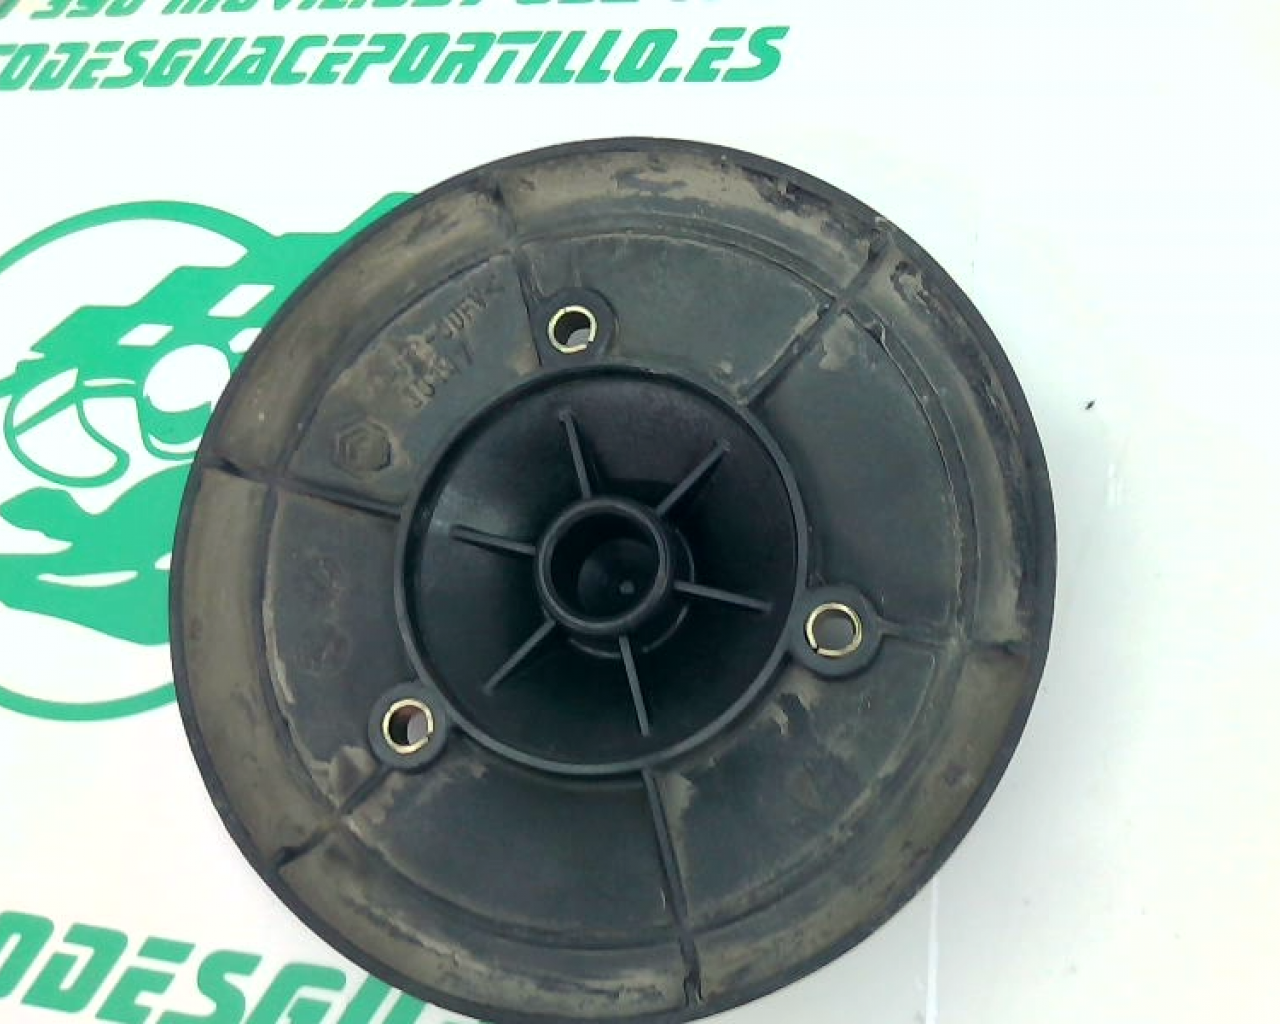 Ventilador del plato magnetico Piaggio FLY 50 2T (2005-2007)